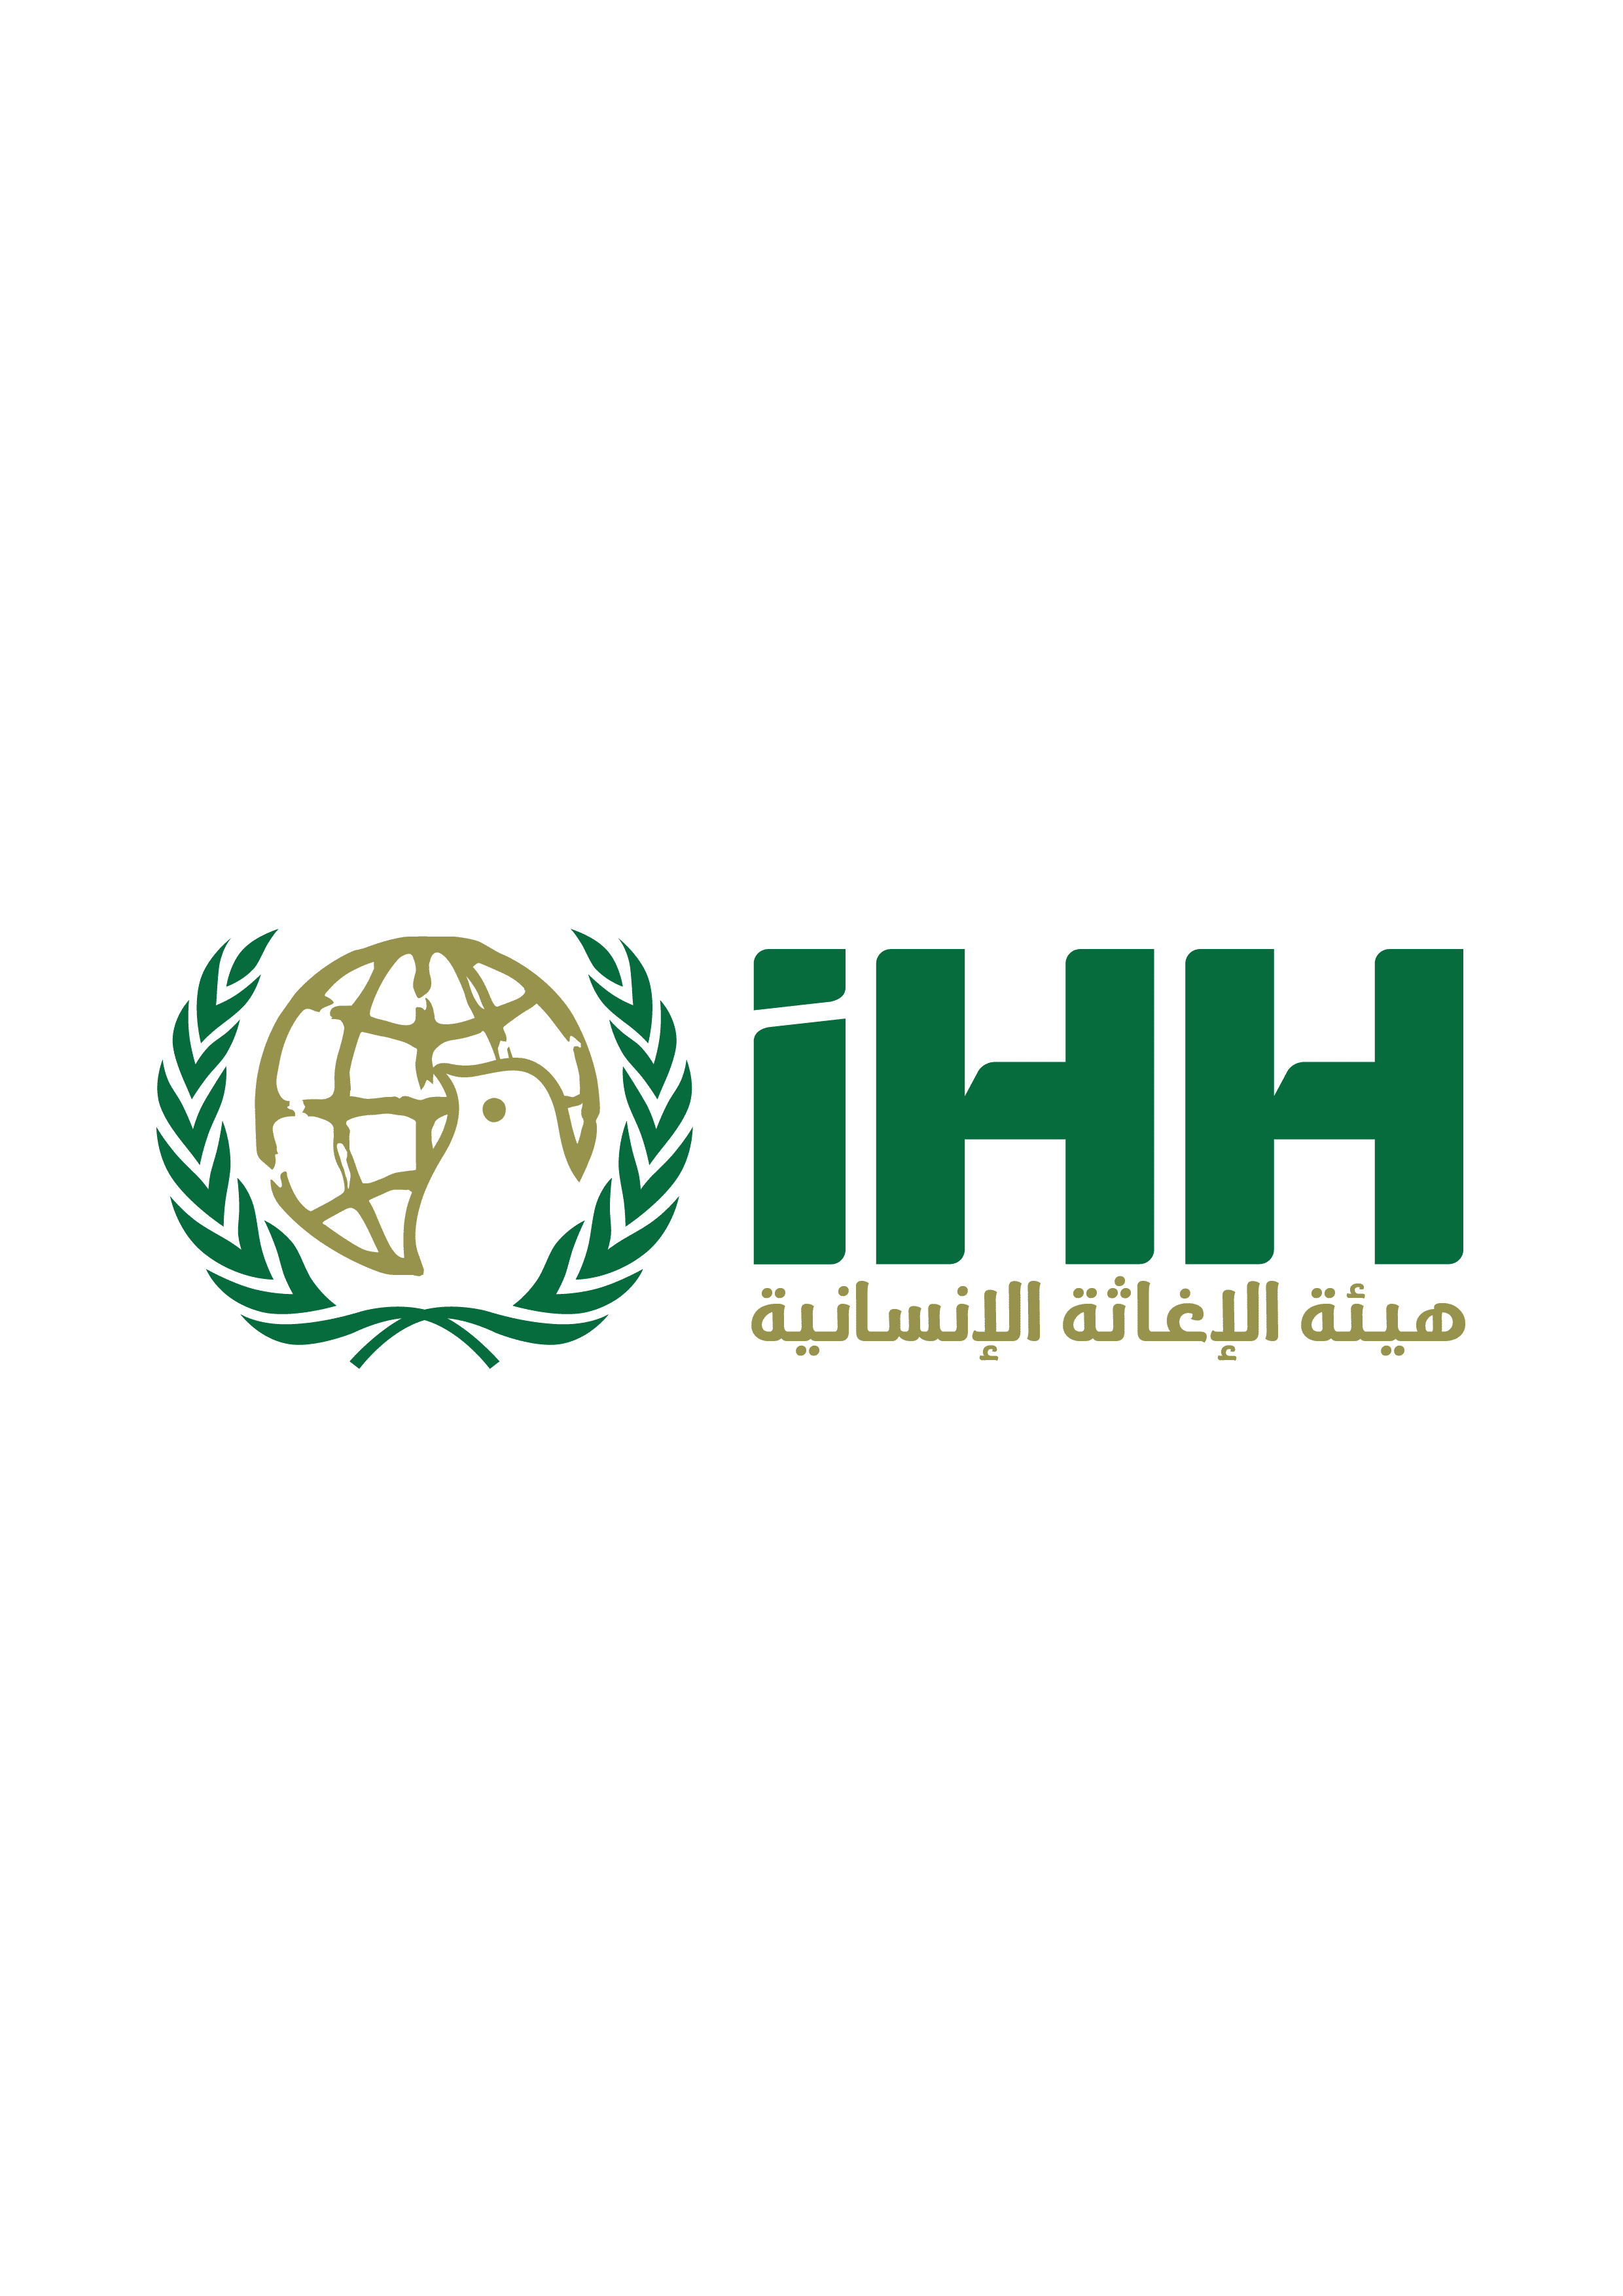 ihh-arapca-logo-3